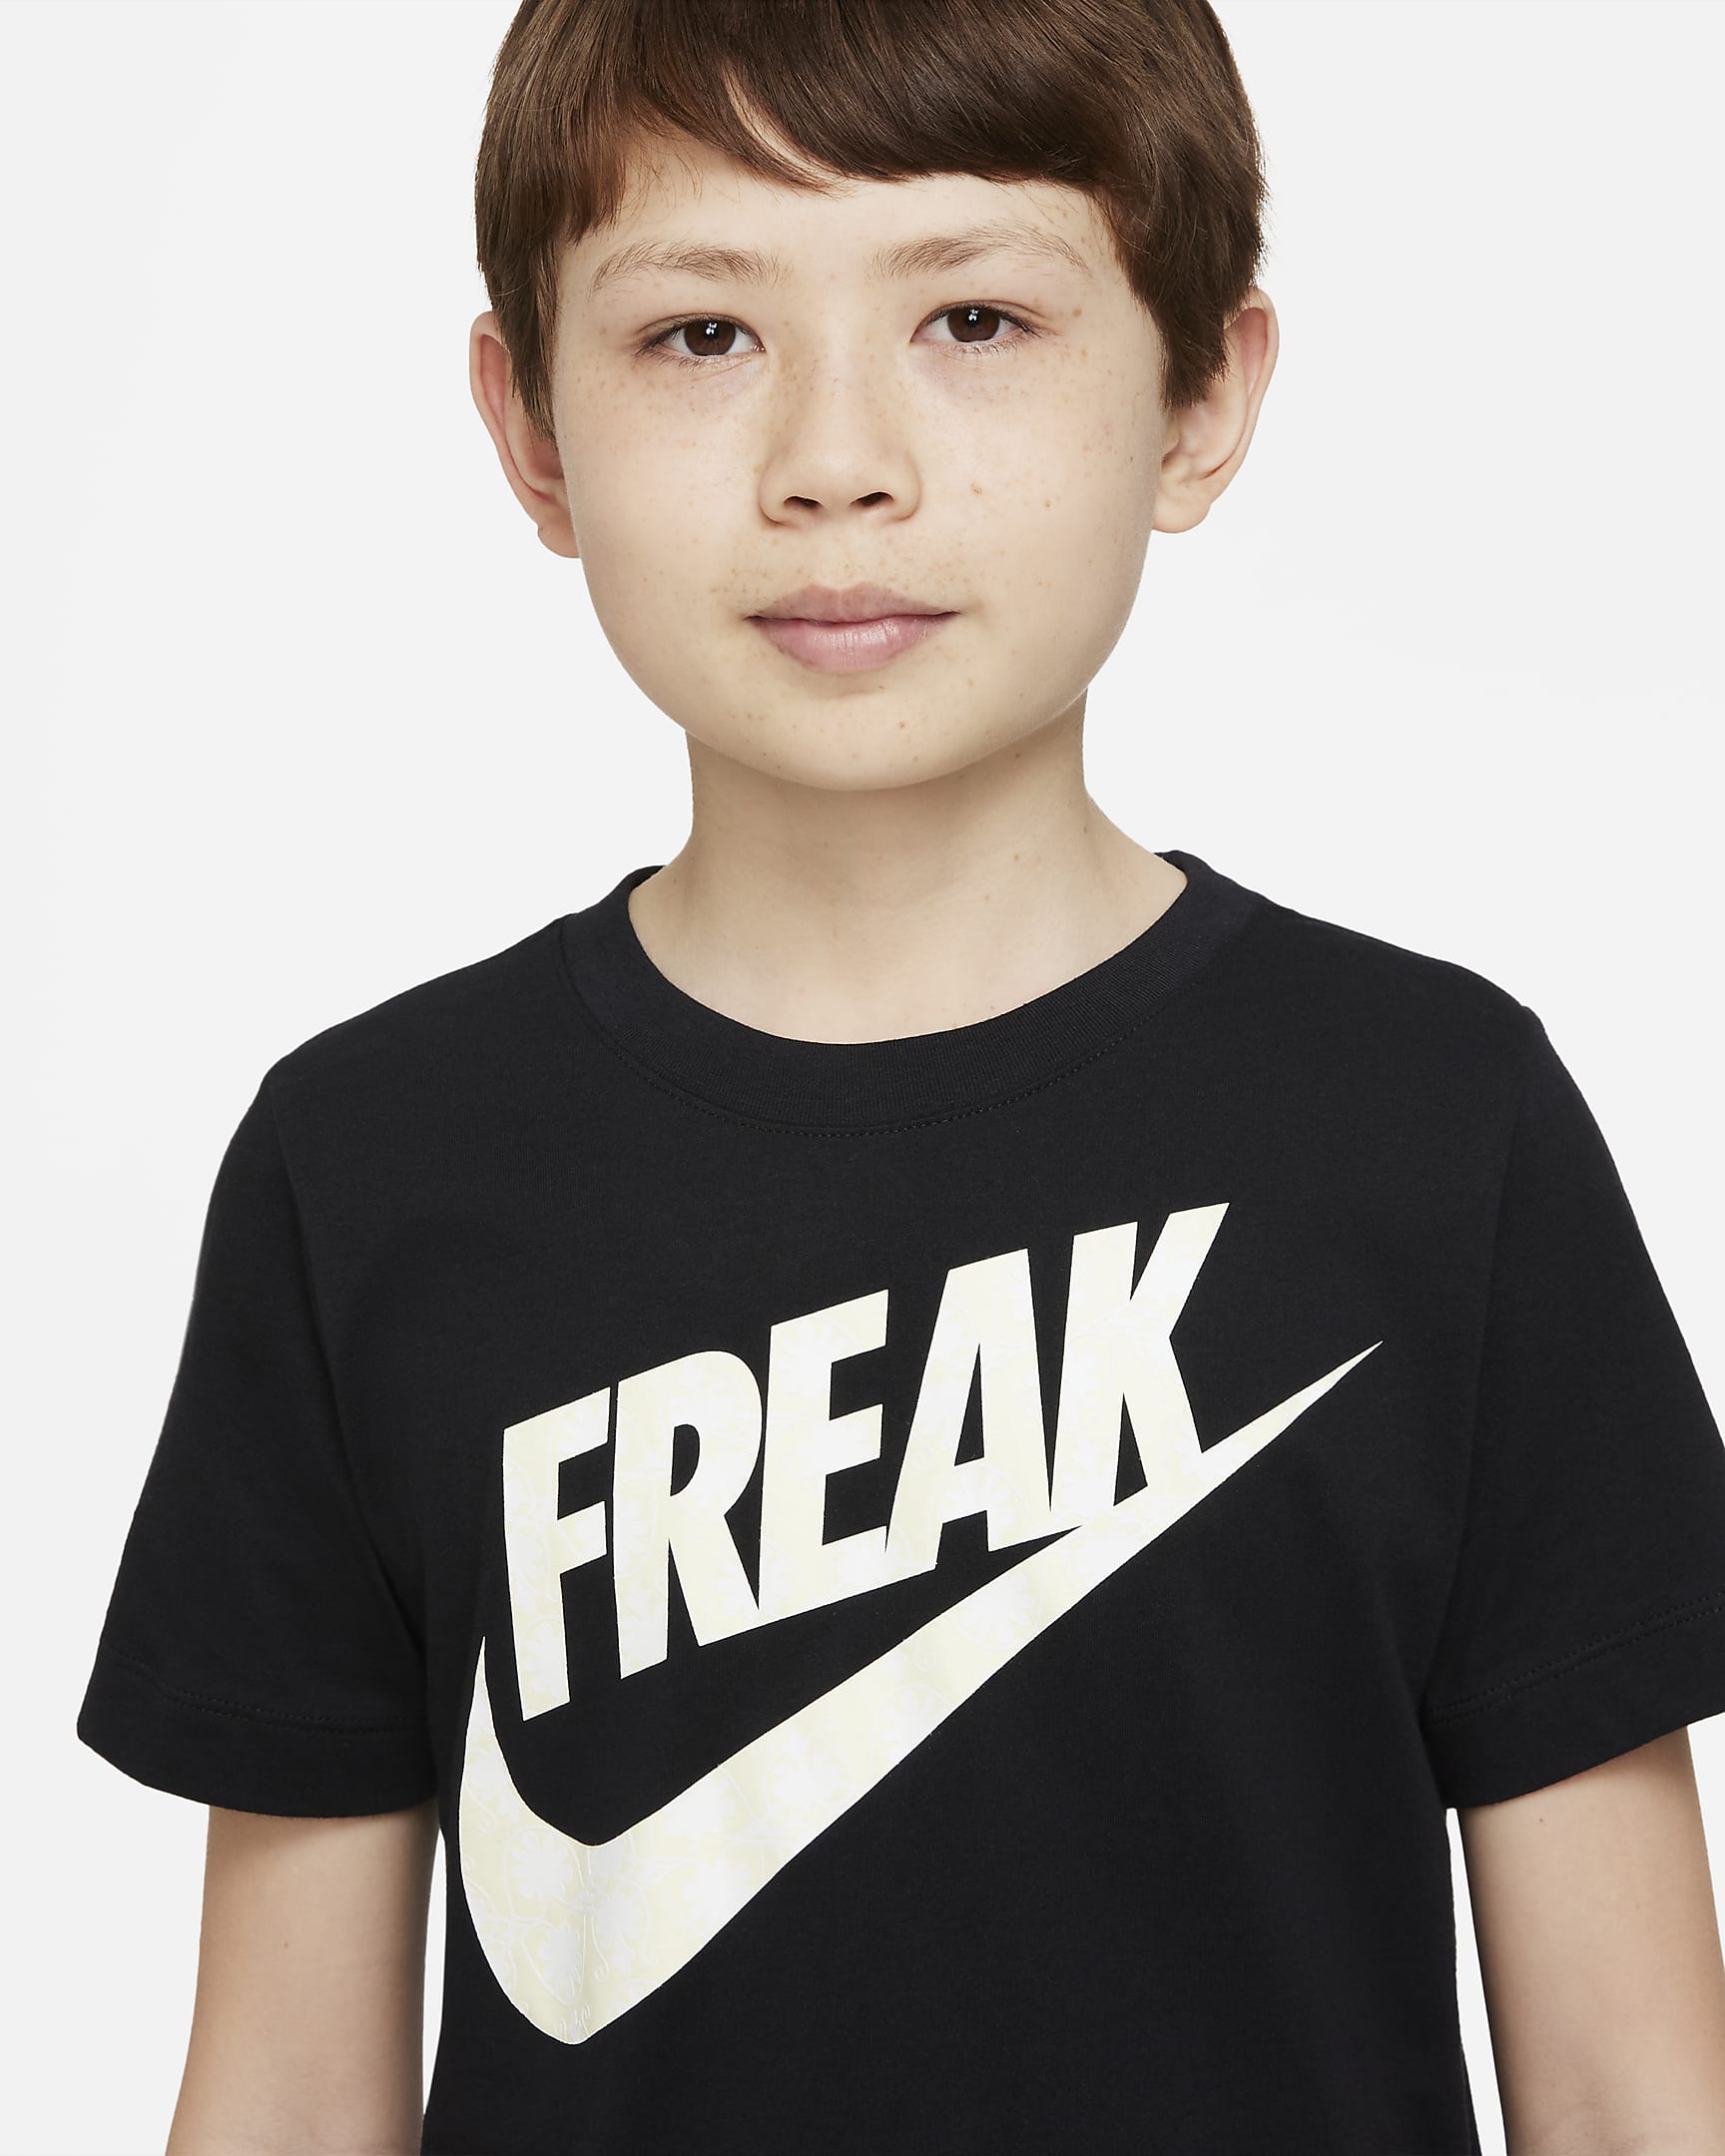 Nike Dri-FIT Older Kids' (Boys') Training T-Shirt. Nike ID